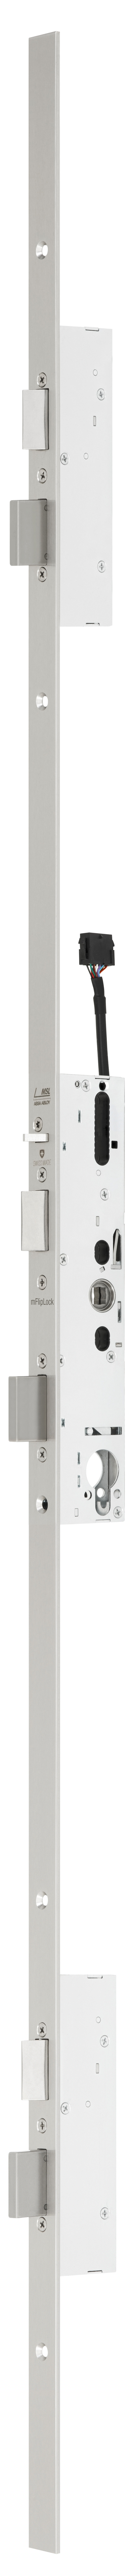 mFlipLock check security multi-point lock 24471